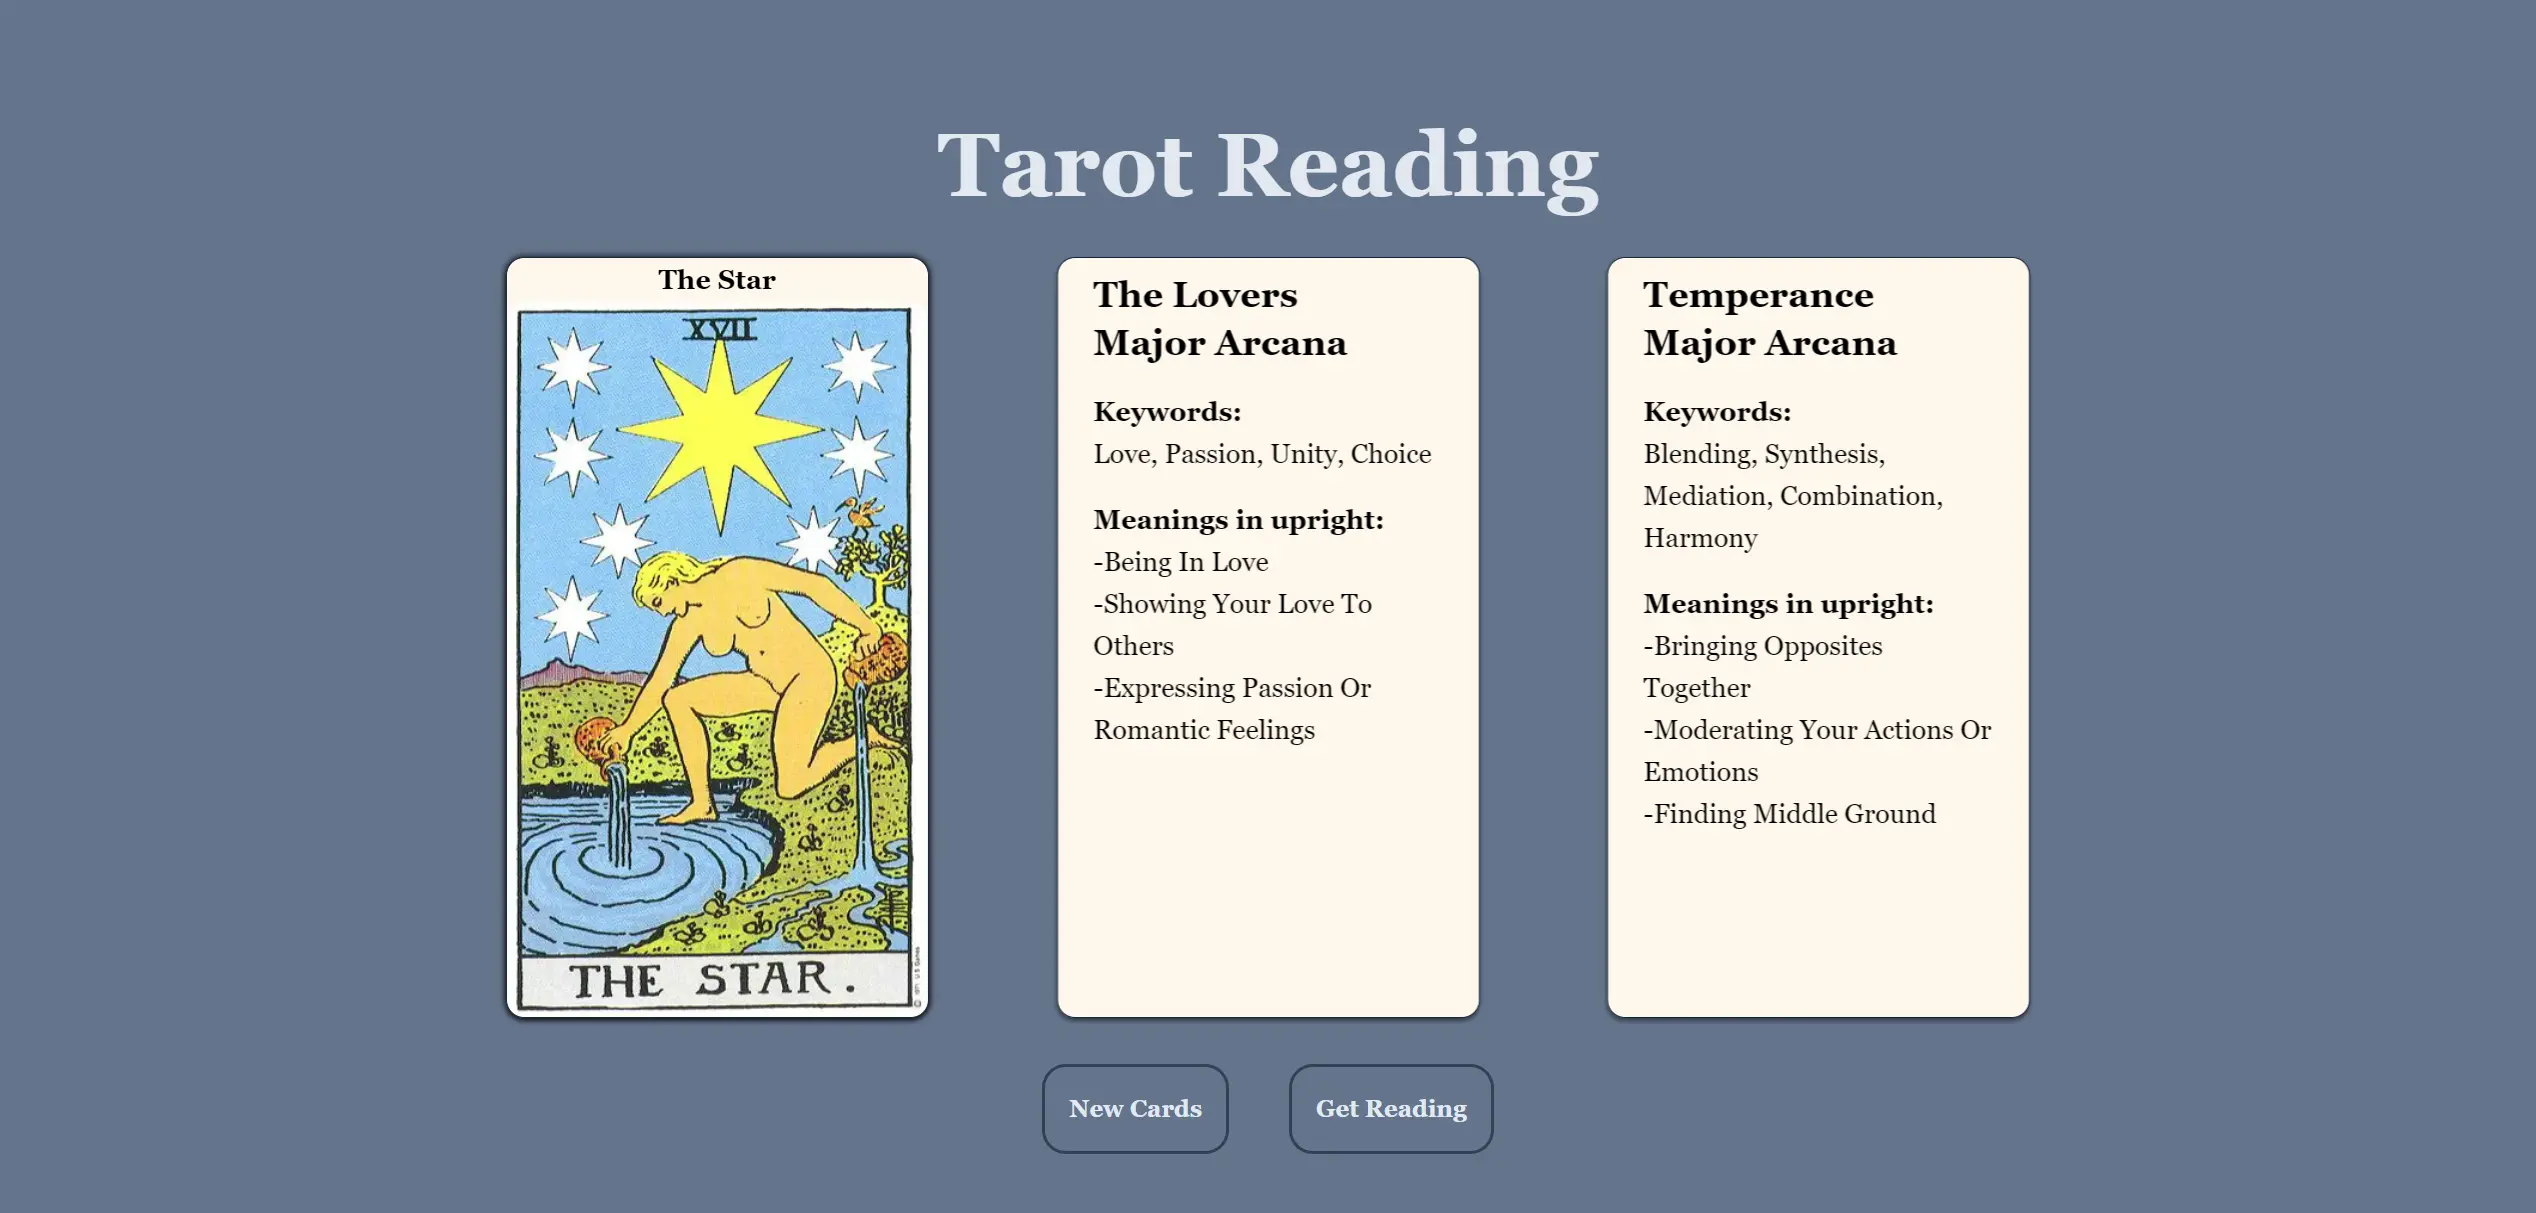 A Tarot card reading simulator, showing card descriptions